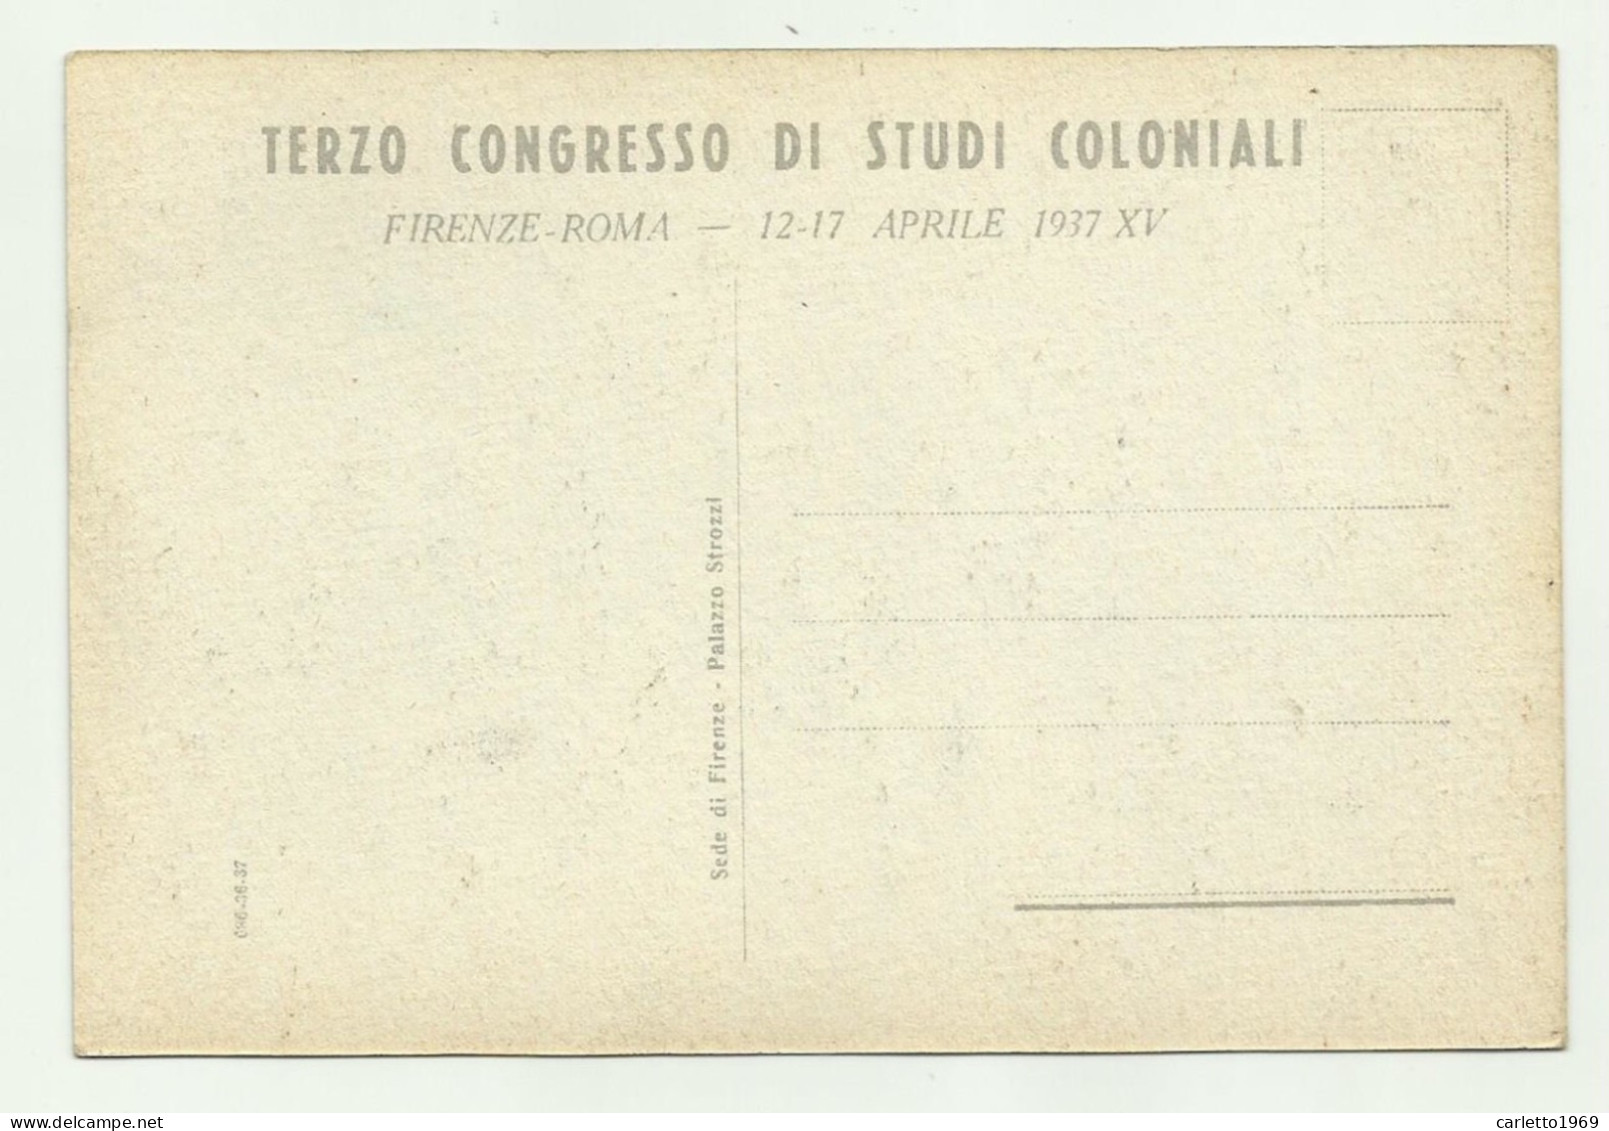 3 CONGRESSO NAZ. STUDI COLONIALI - FIRENZE - ROMA 12-17 APRILE 1937 - NV  FG - Matériel